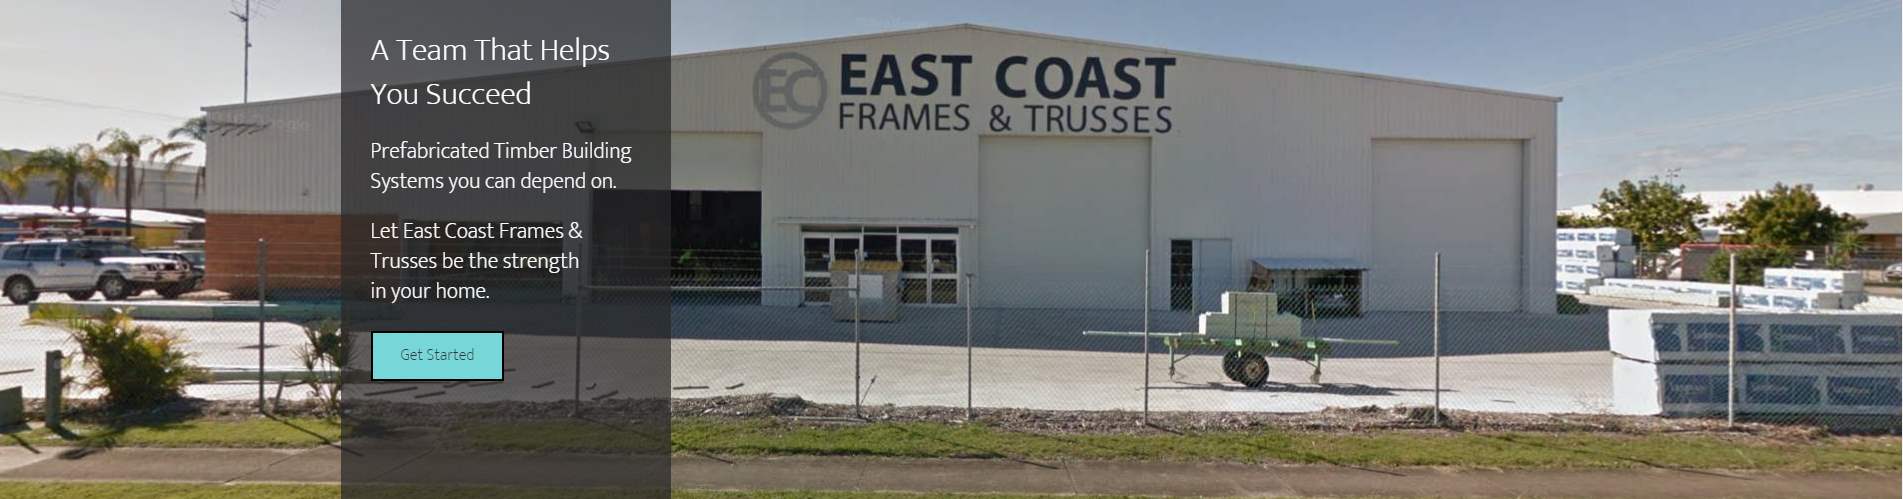 East Coast Trusses & Frames Sunshine Coast Timber Trusses Prefabricated Timber Frames 3000